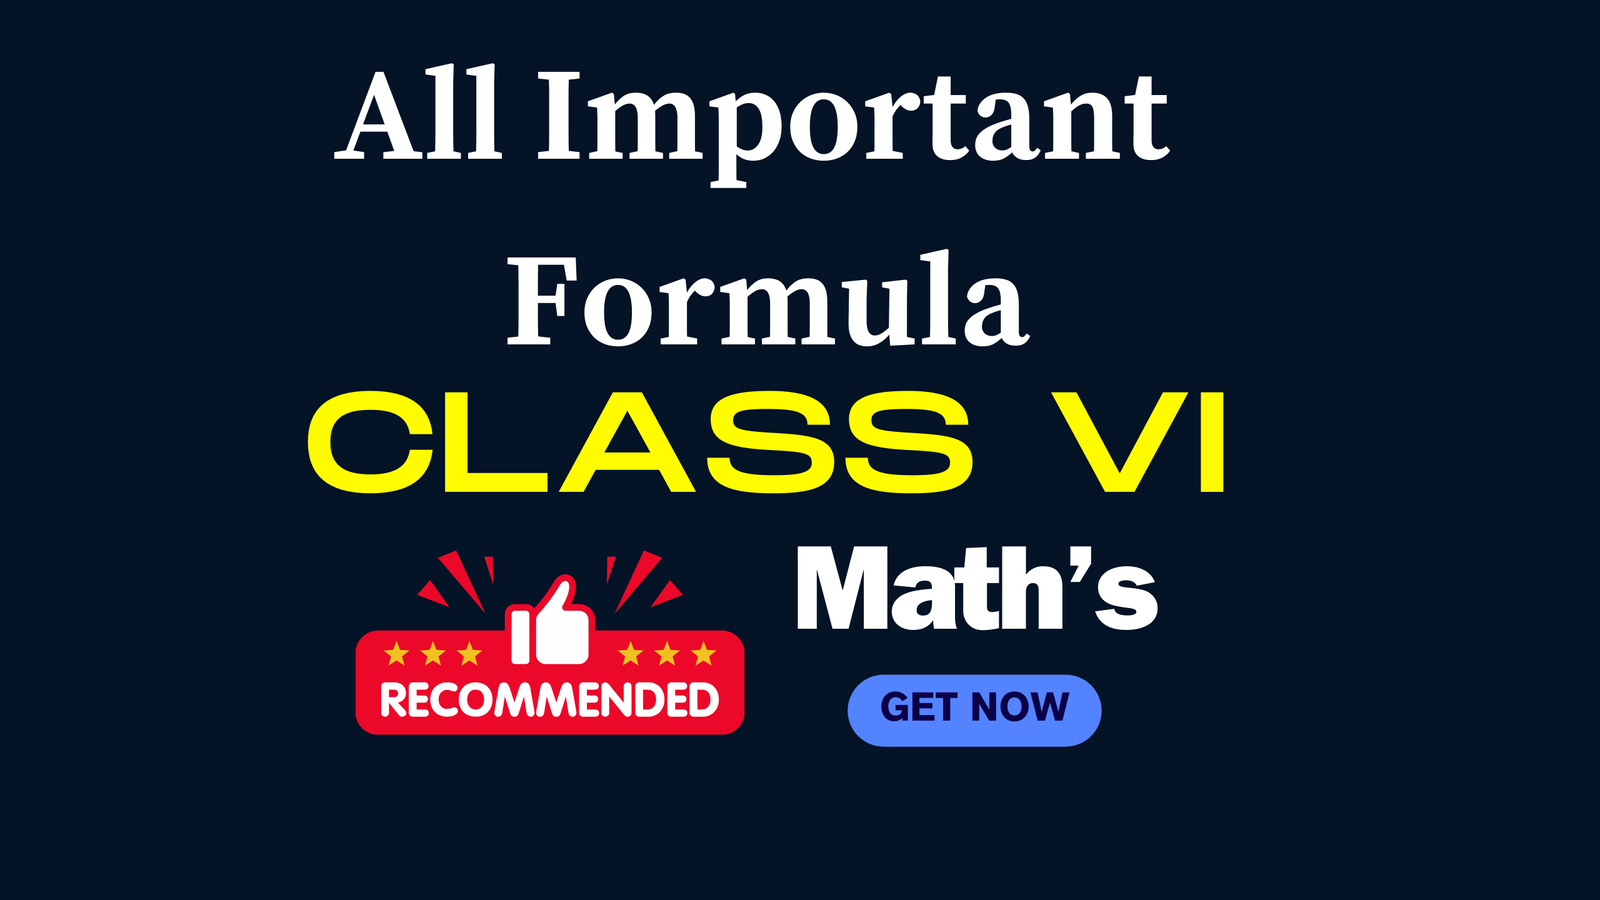 All Important Math's Formula Class VI